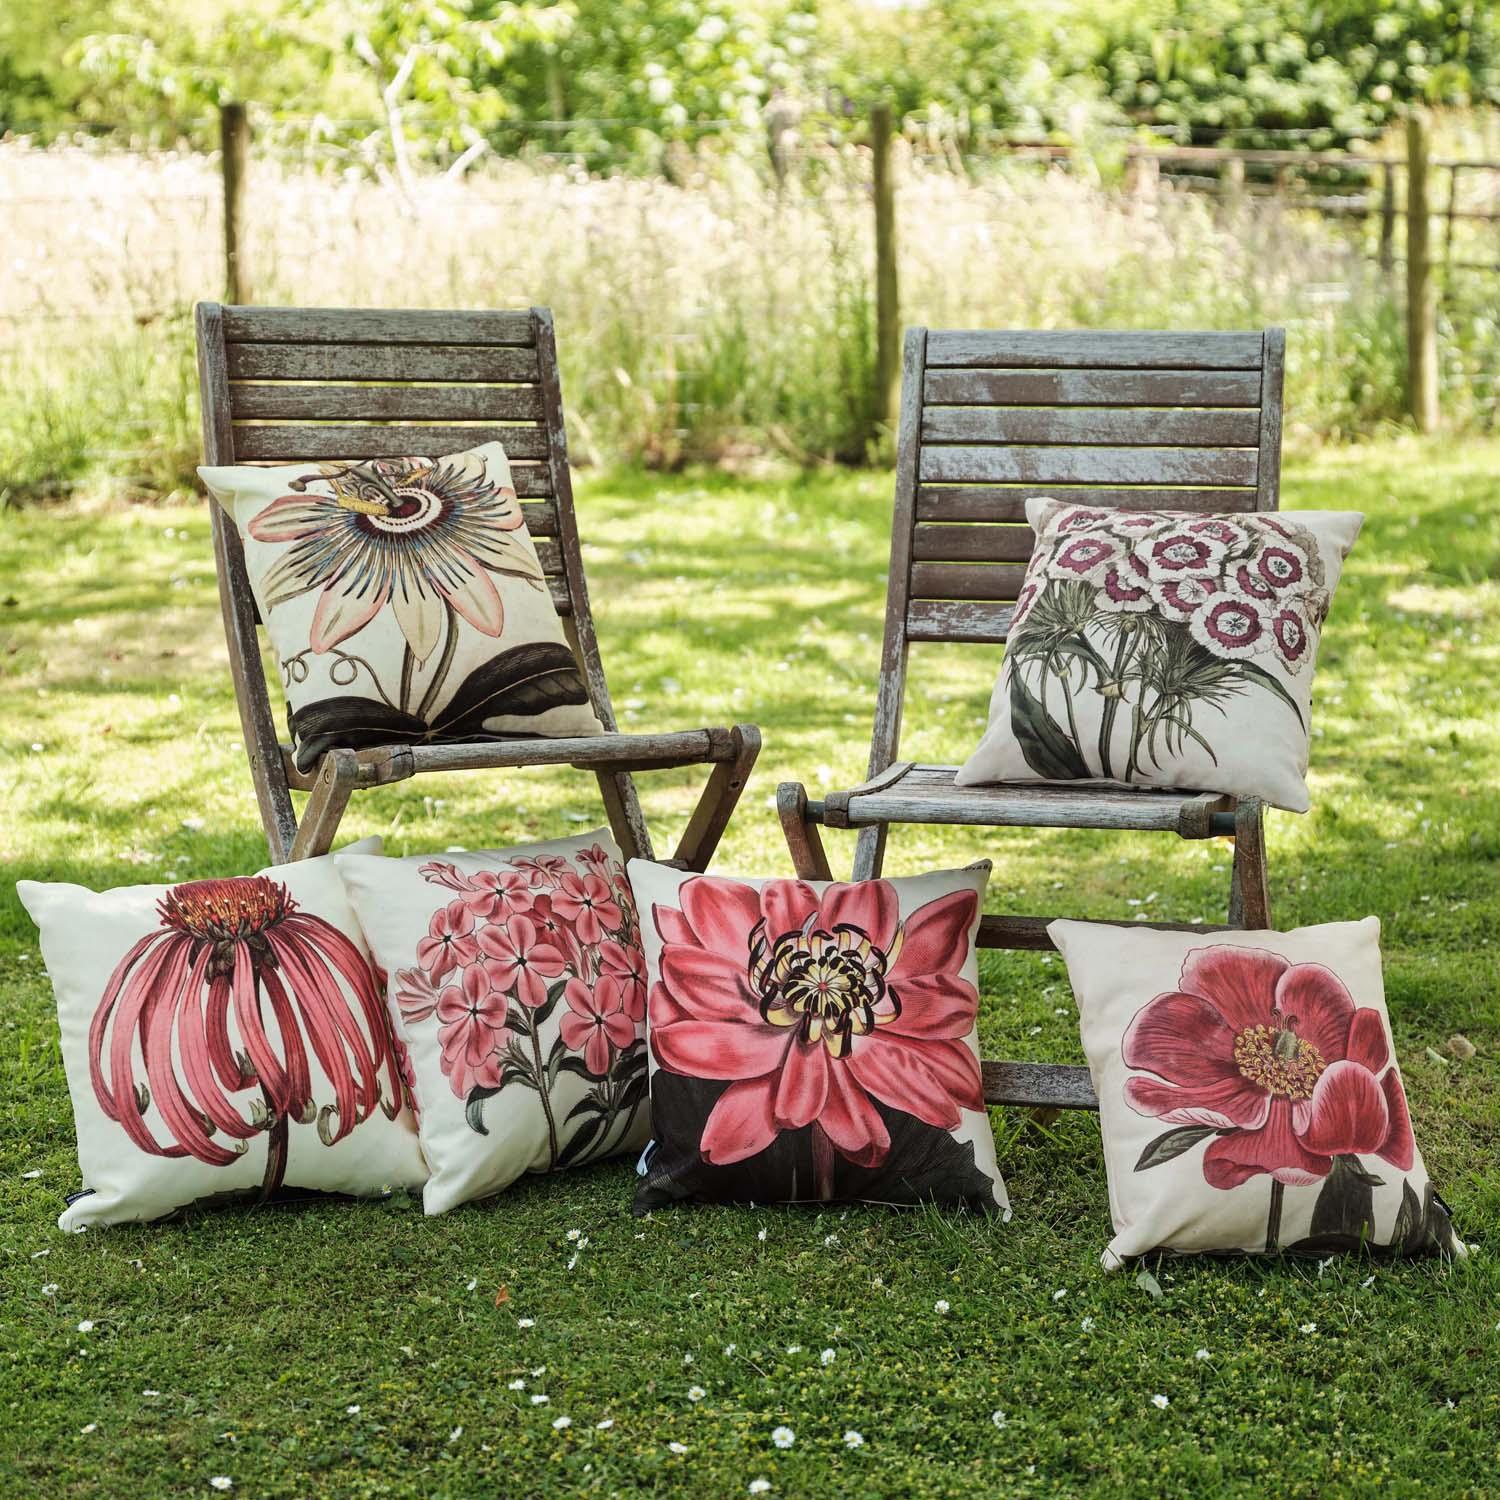 Nootka Lupin - Botanical Outdoor Cushion - Handmade Cushions UK - WeLoveCushions